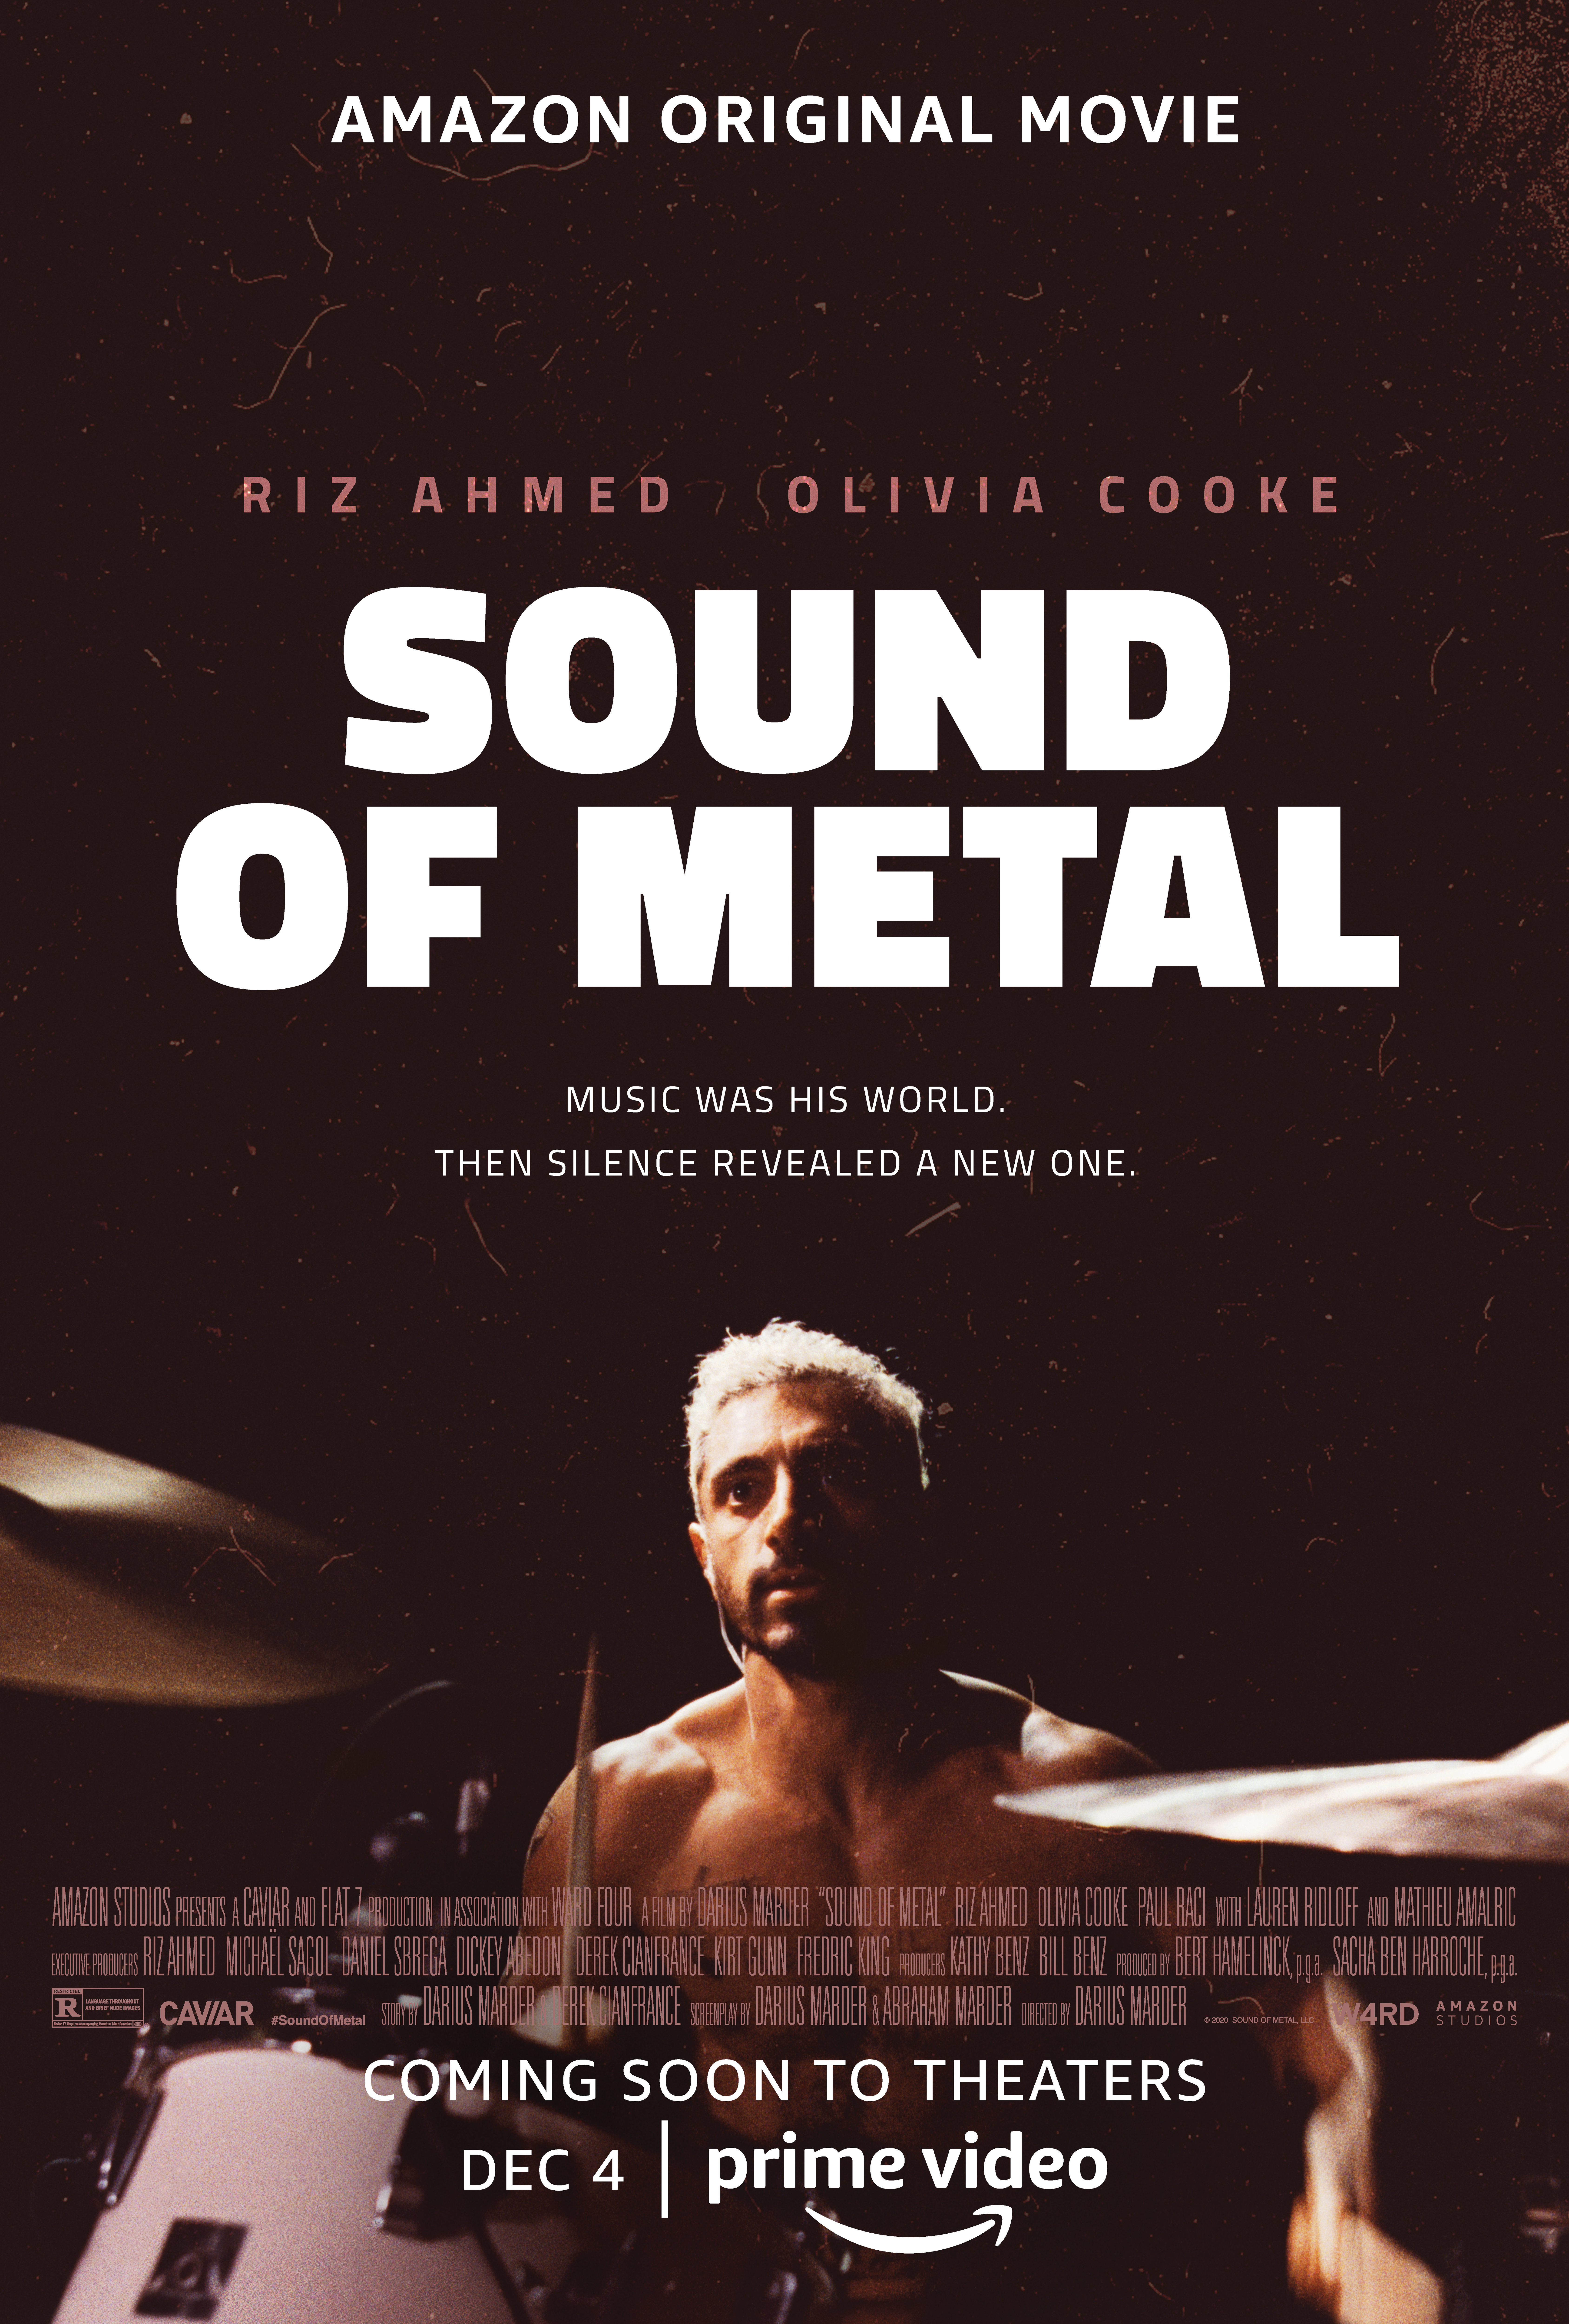 Nonton film Sound of Metal layarkaca21 indoxx1 ganool online streaming terbaru